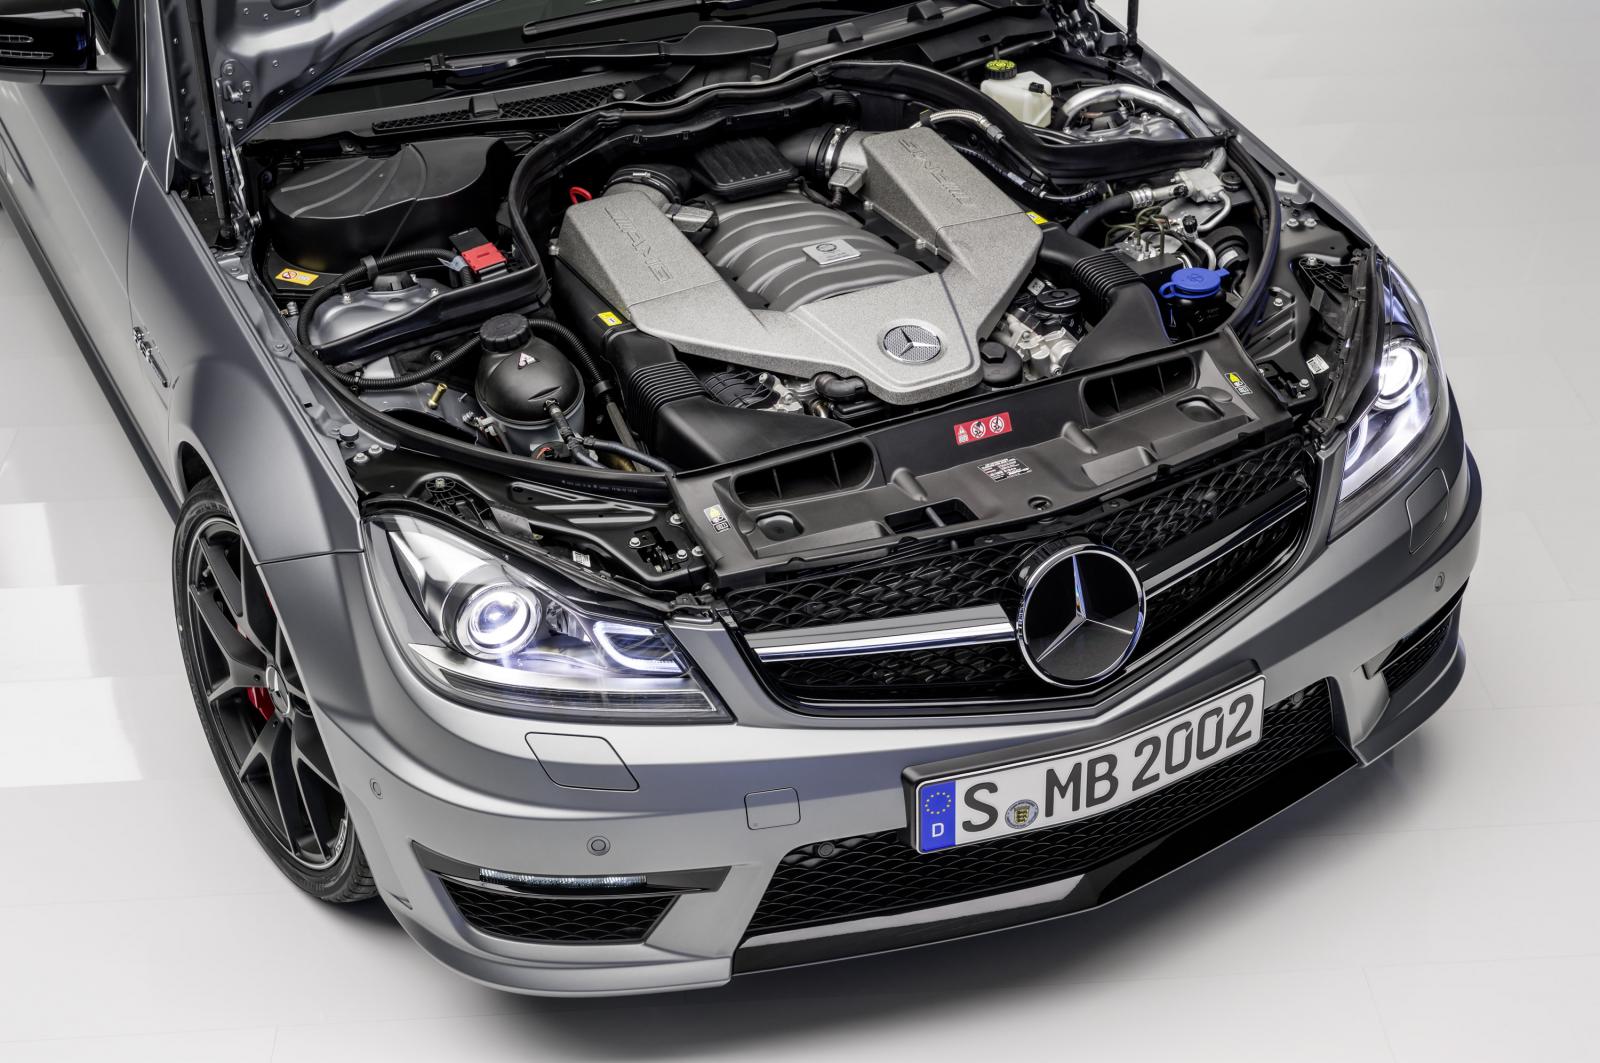 2014-Mercedes-Benz-C63-AMG-Edition-507-12.jpg